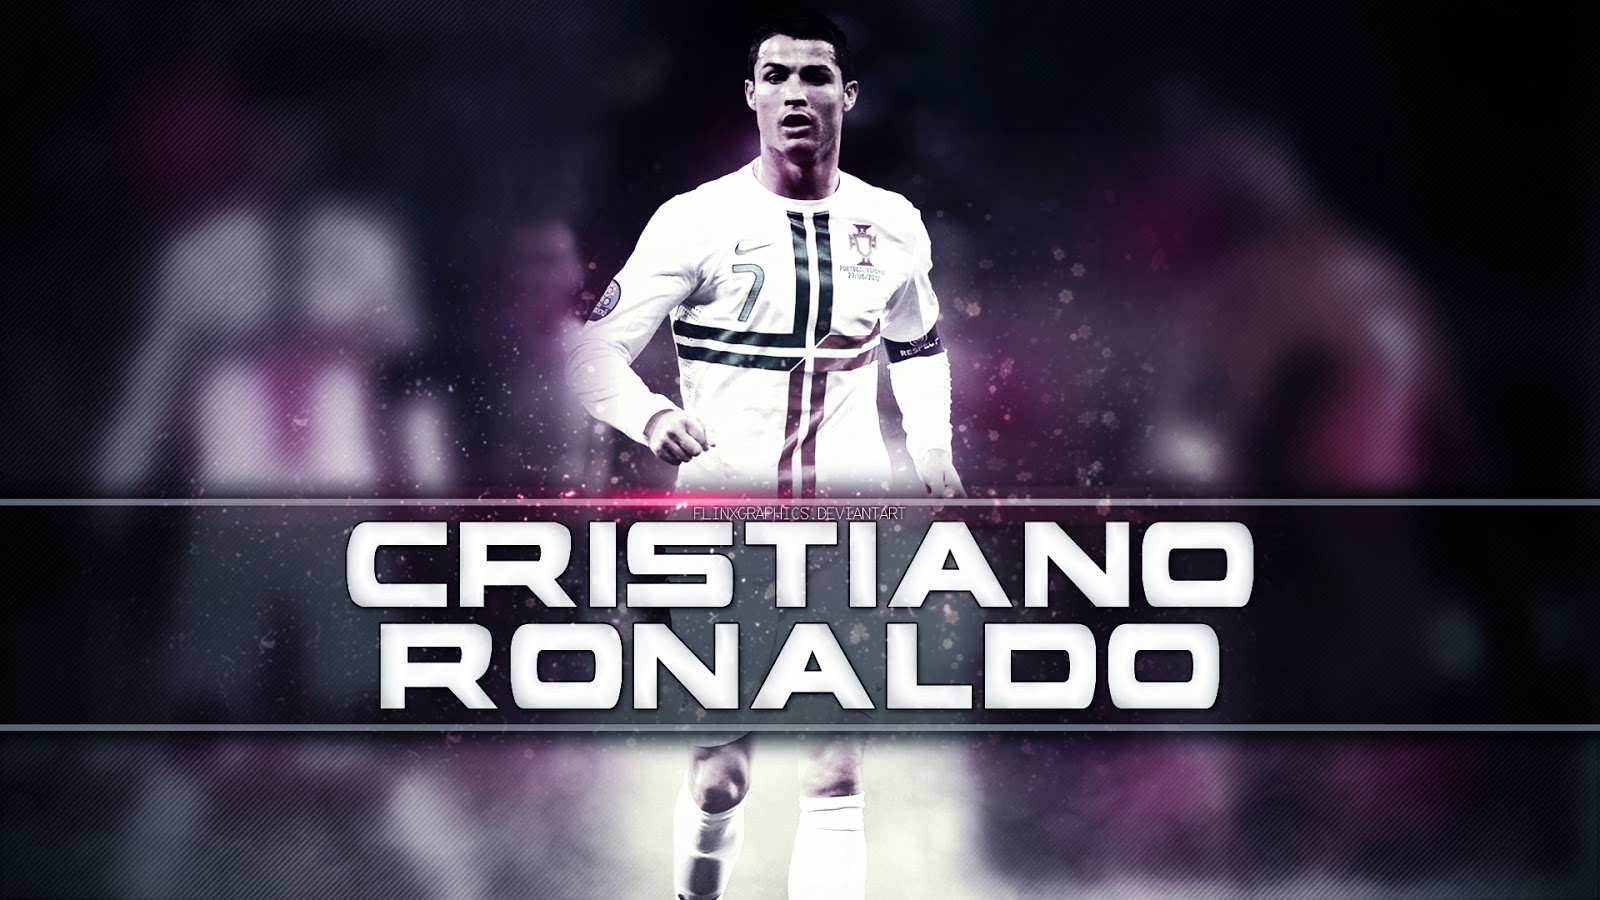 Cristiano Ronaldo New HD Wallpapers 2014 2015 Football Wallpapers HD